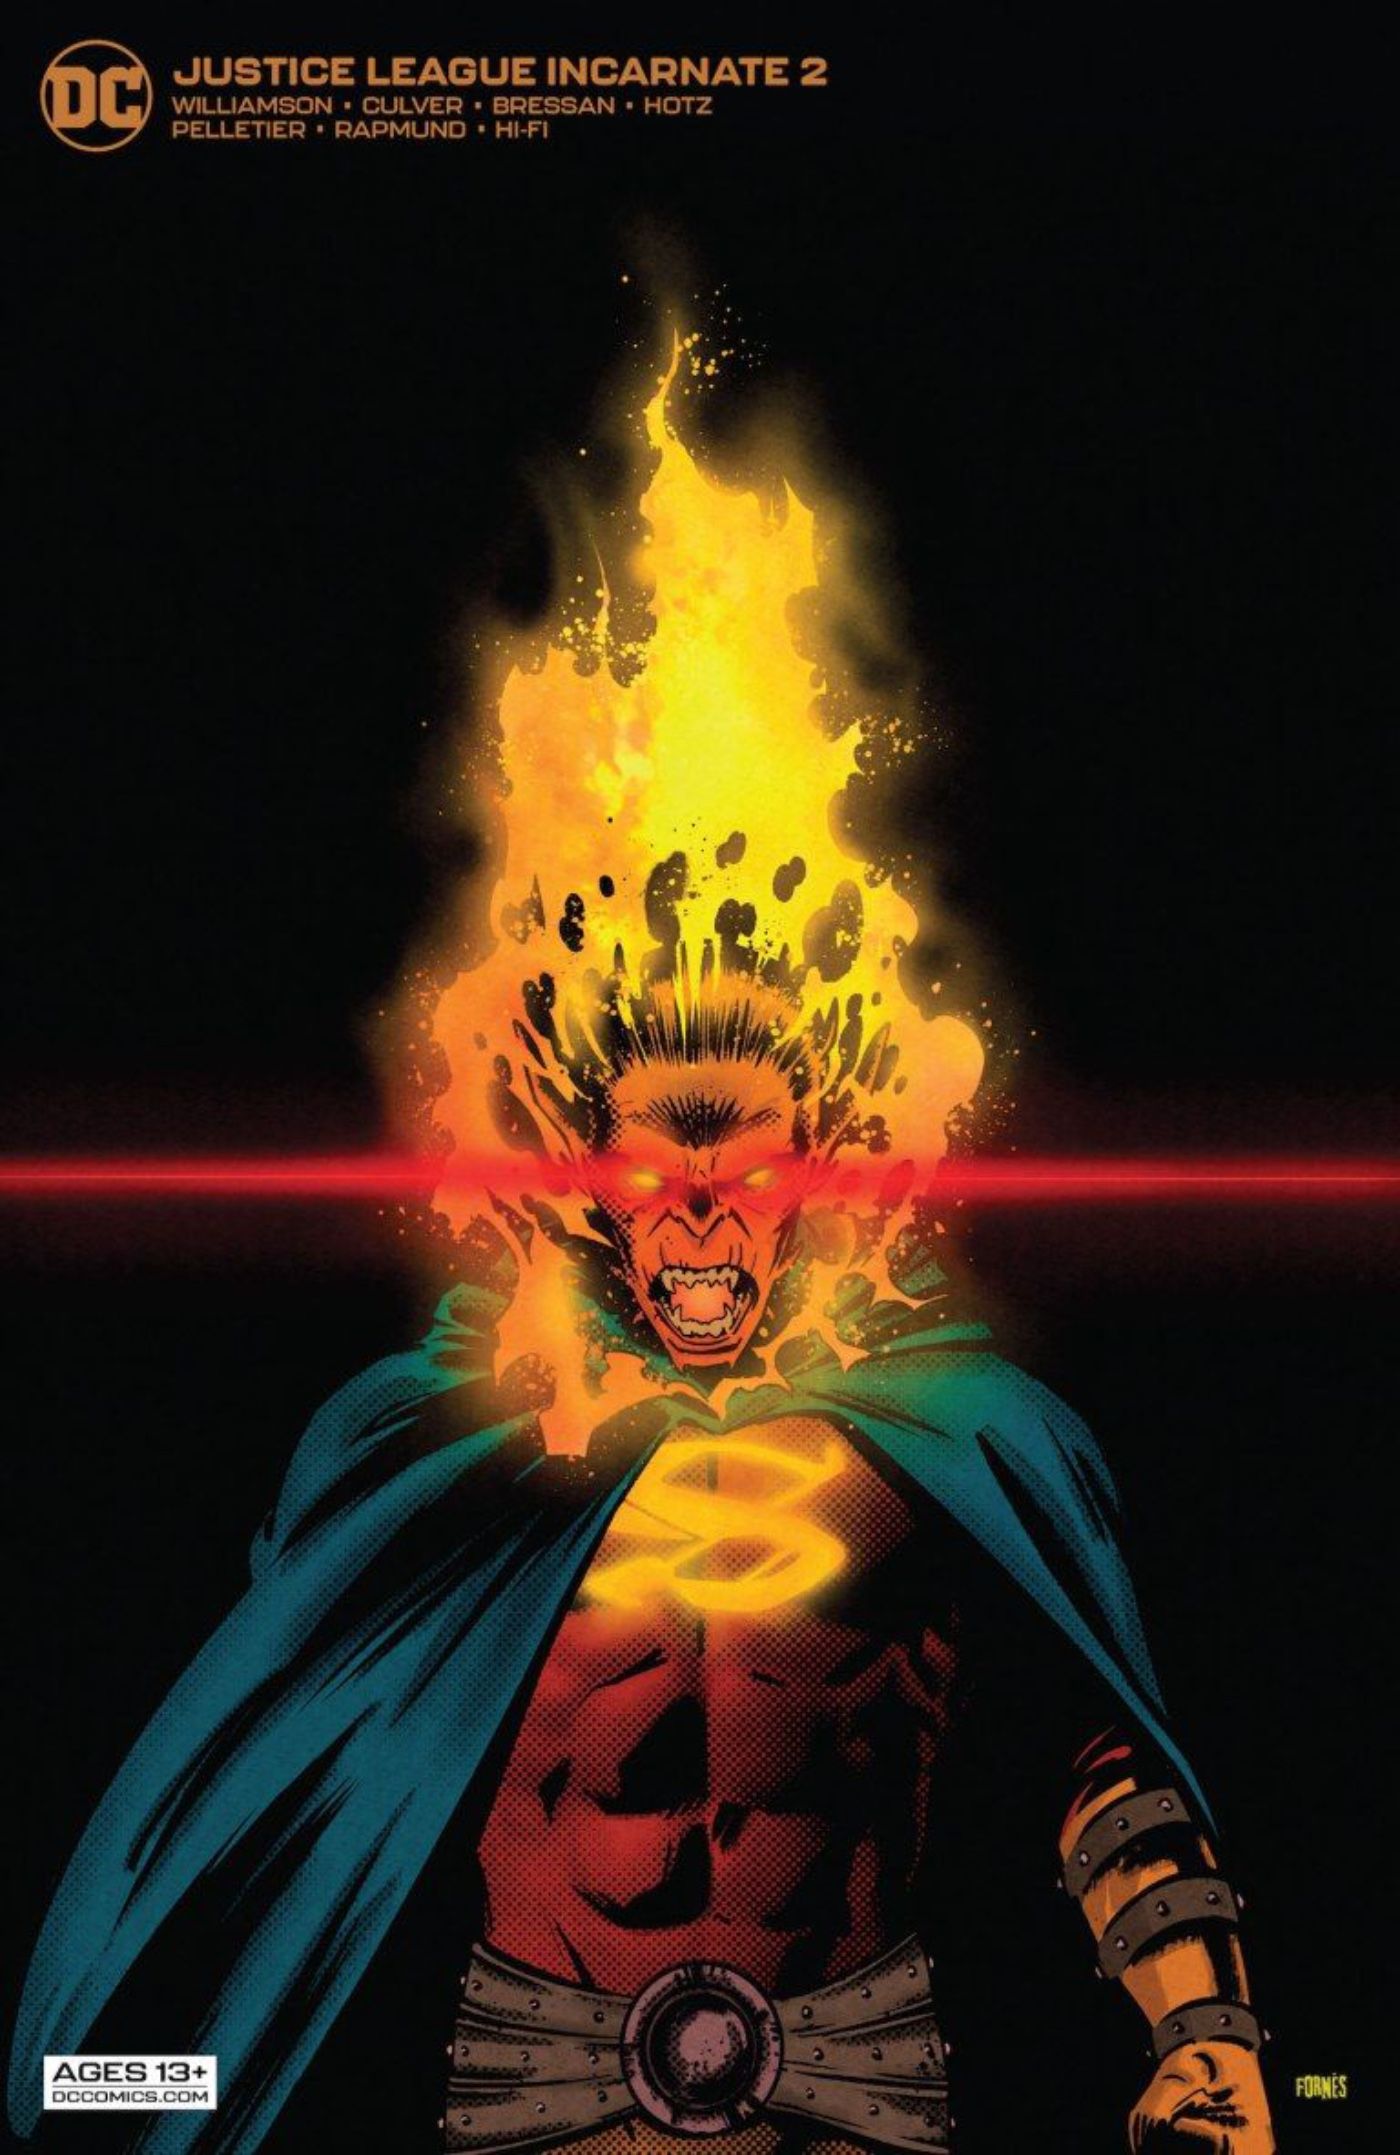 Justice League Just Transformed Constantine into an Actual Superhero